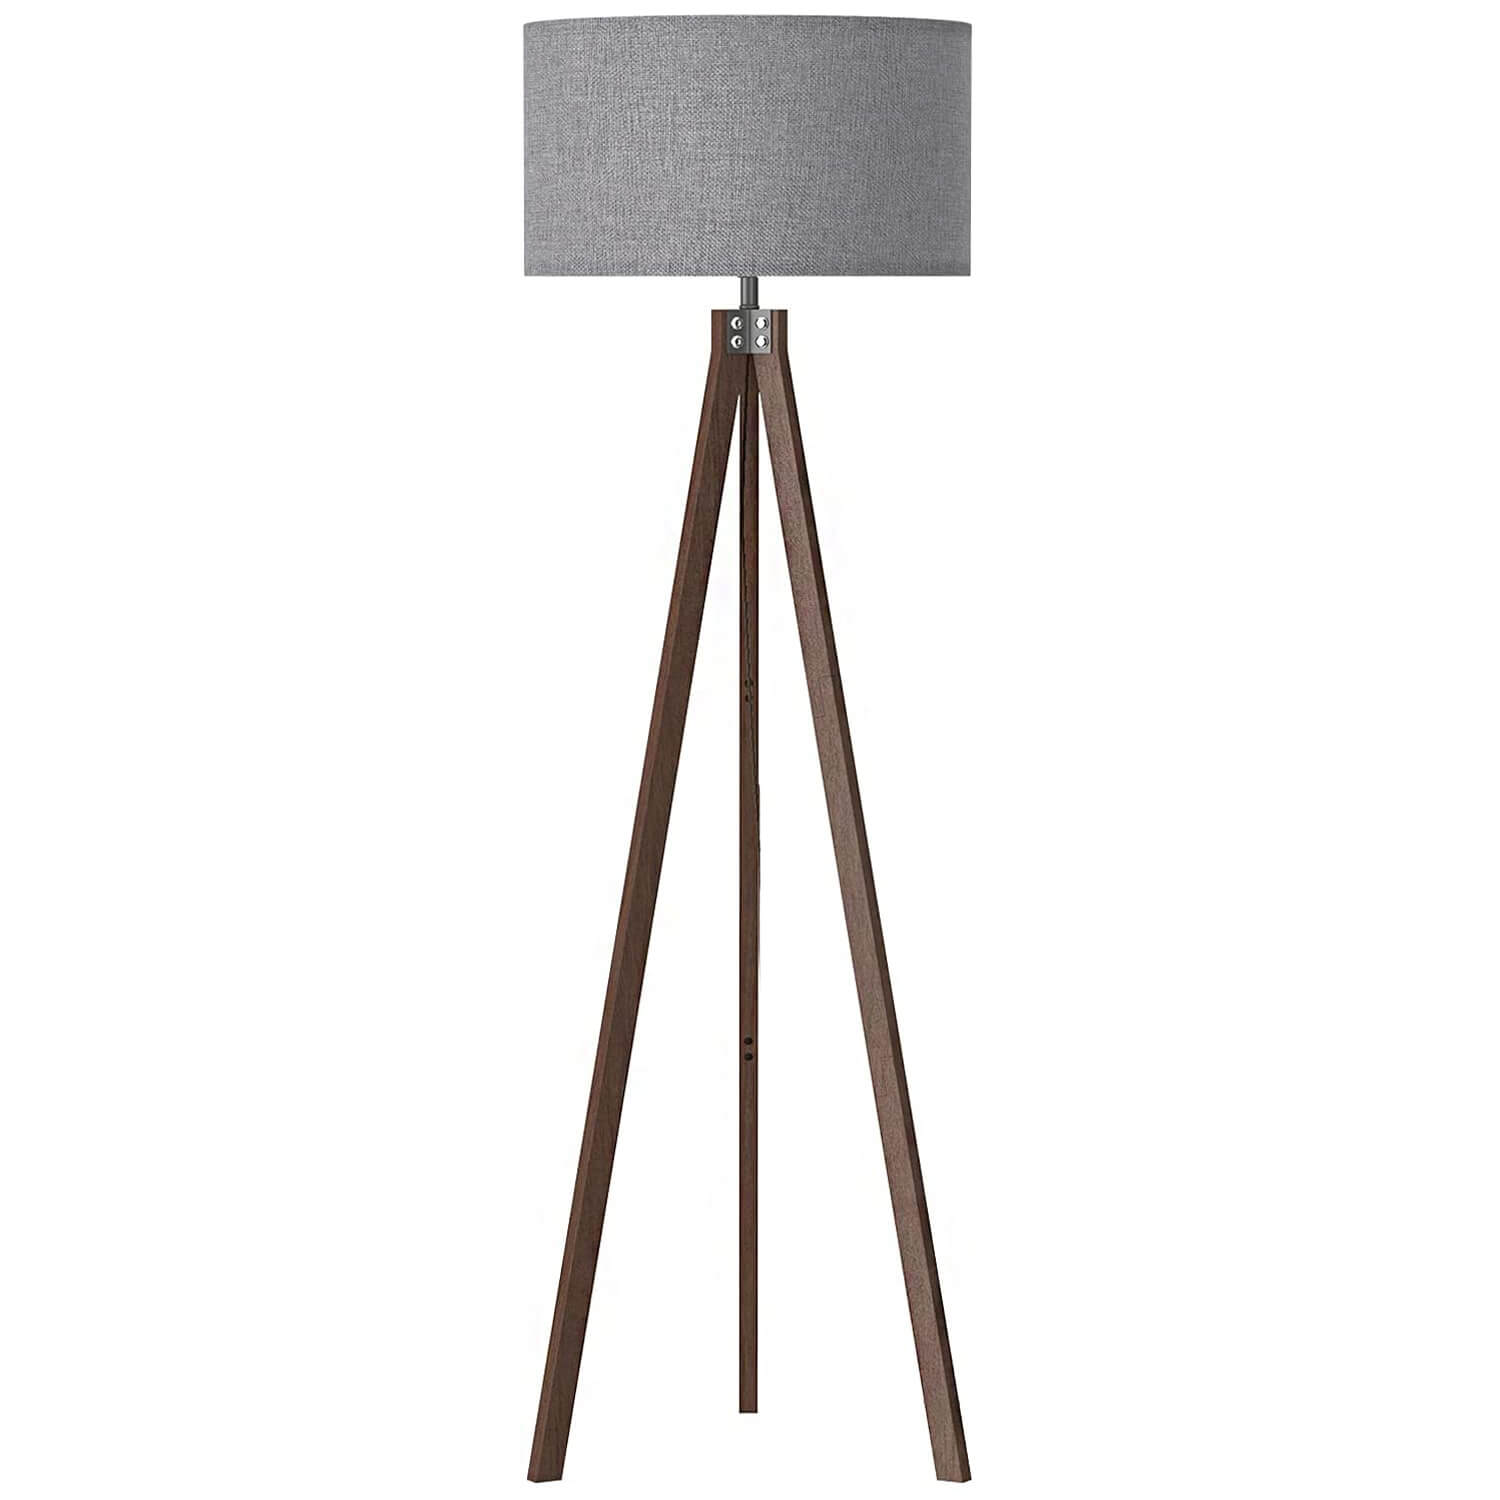 Standing Lamps, Wood Tripod Floor Lamps